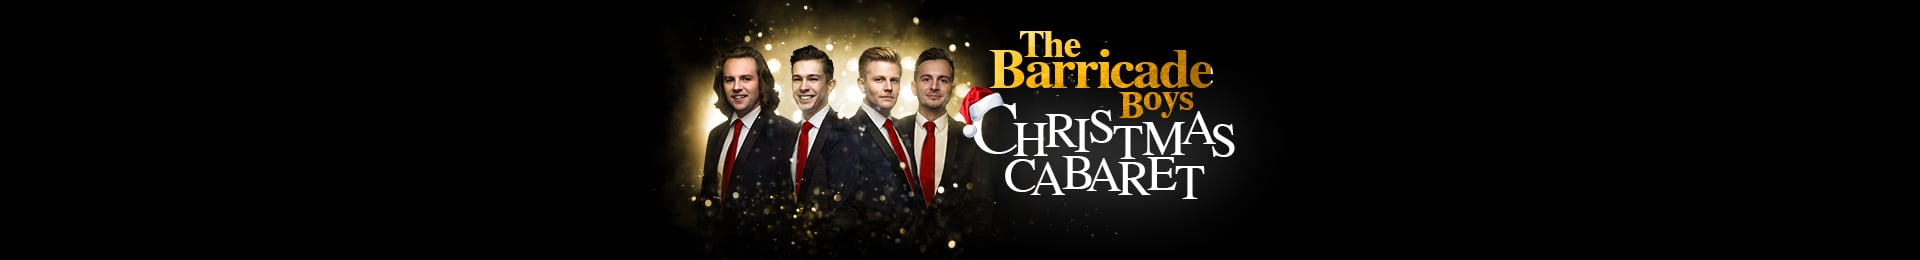 The Barricade Boys - Christmas Cabaret banner image